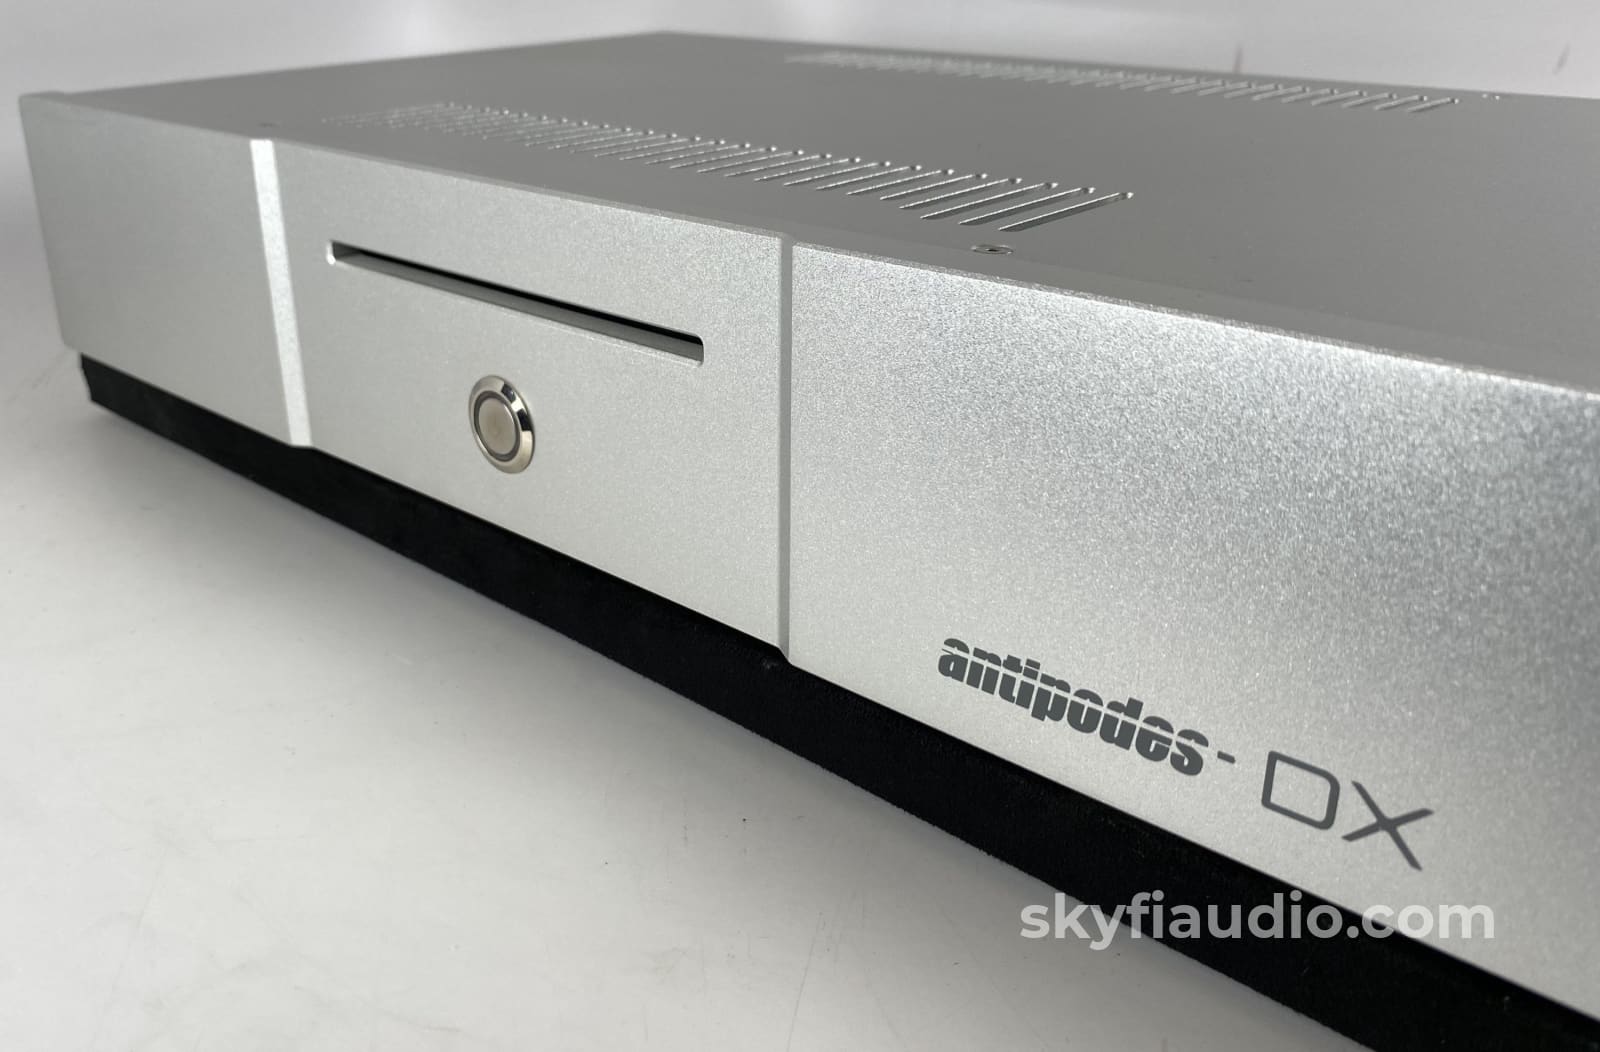 Antipodes Dx Media Streamer And Cd Ripper Preloaded With 20K Tracks! + Digital